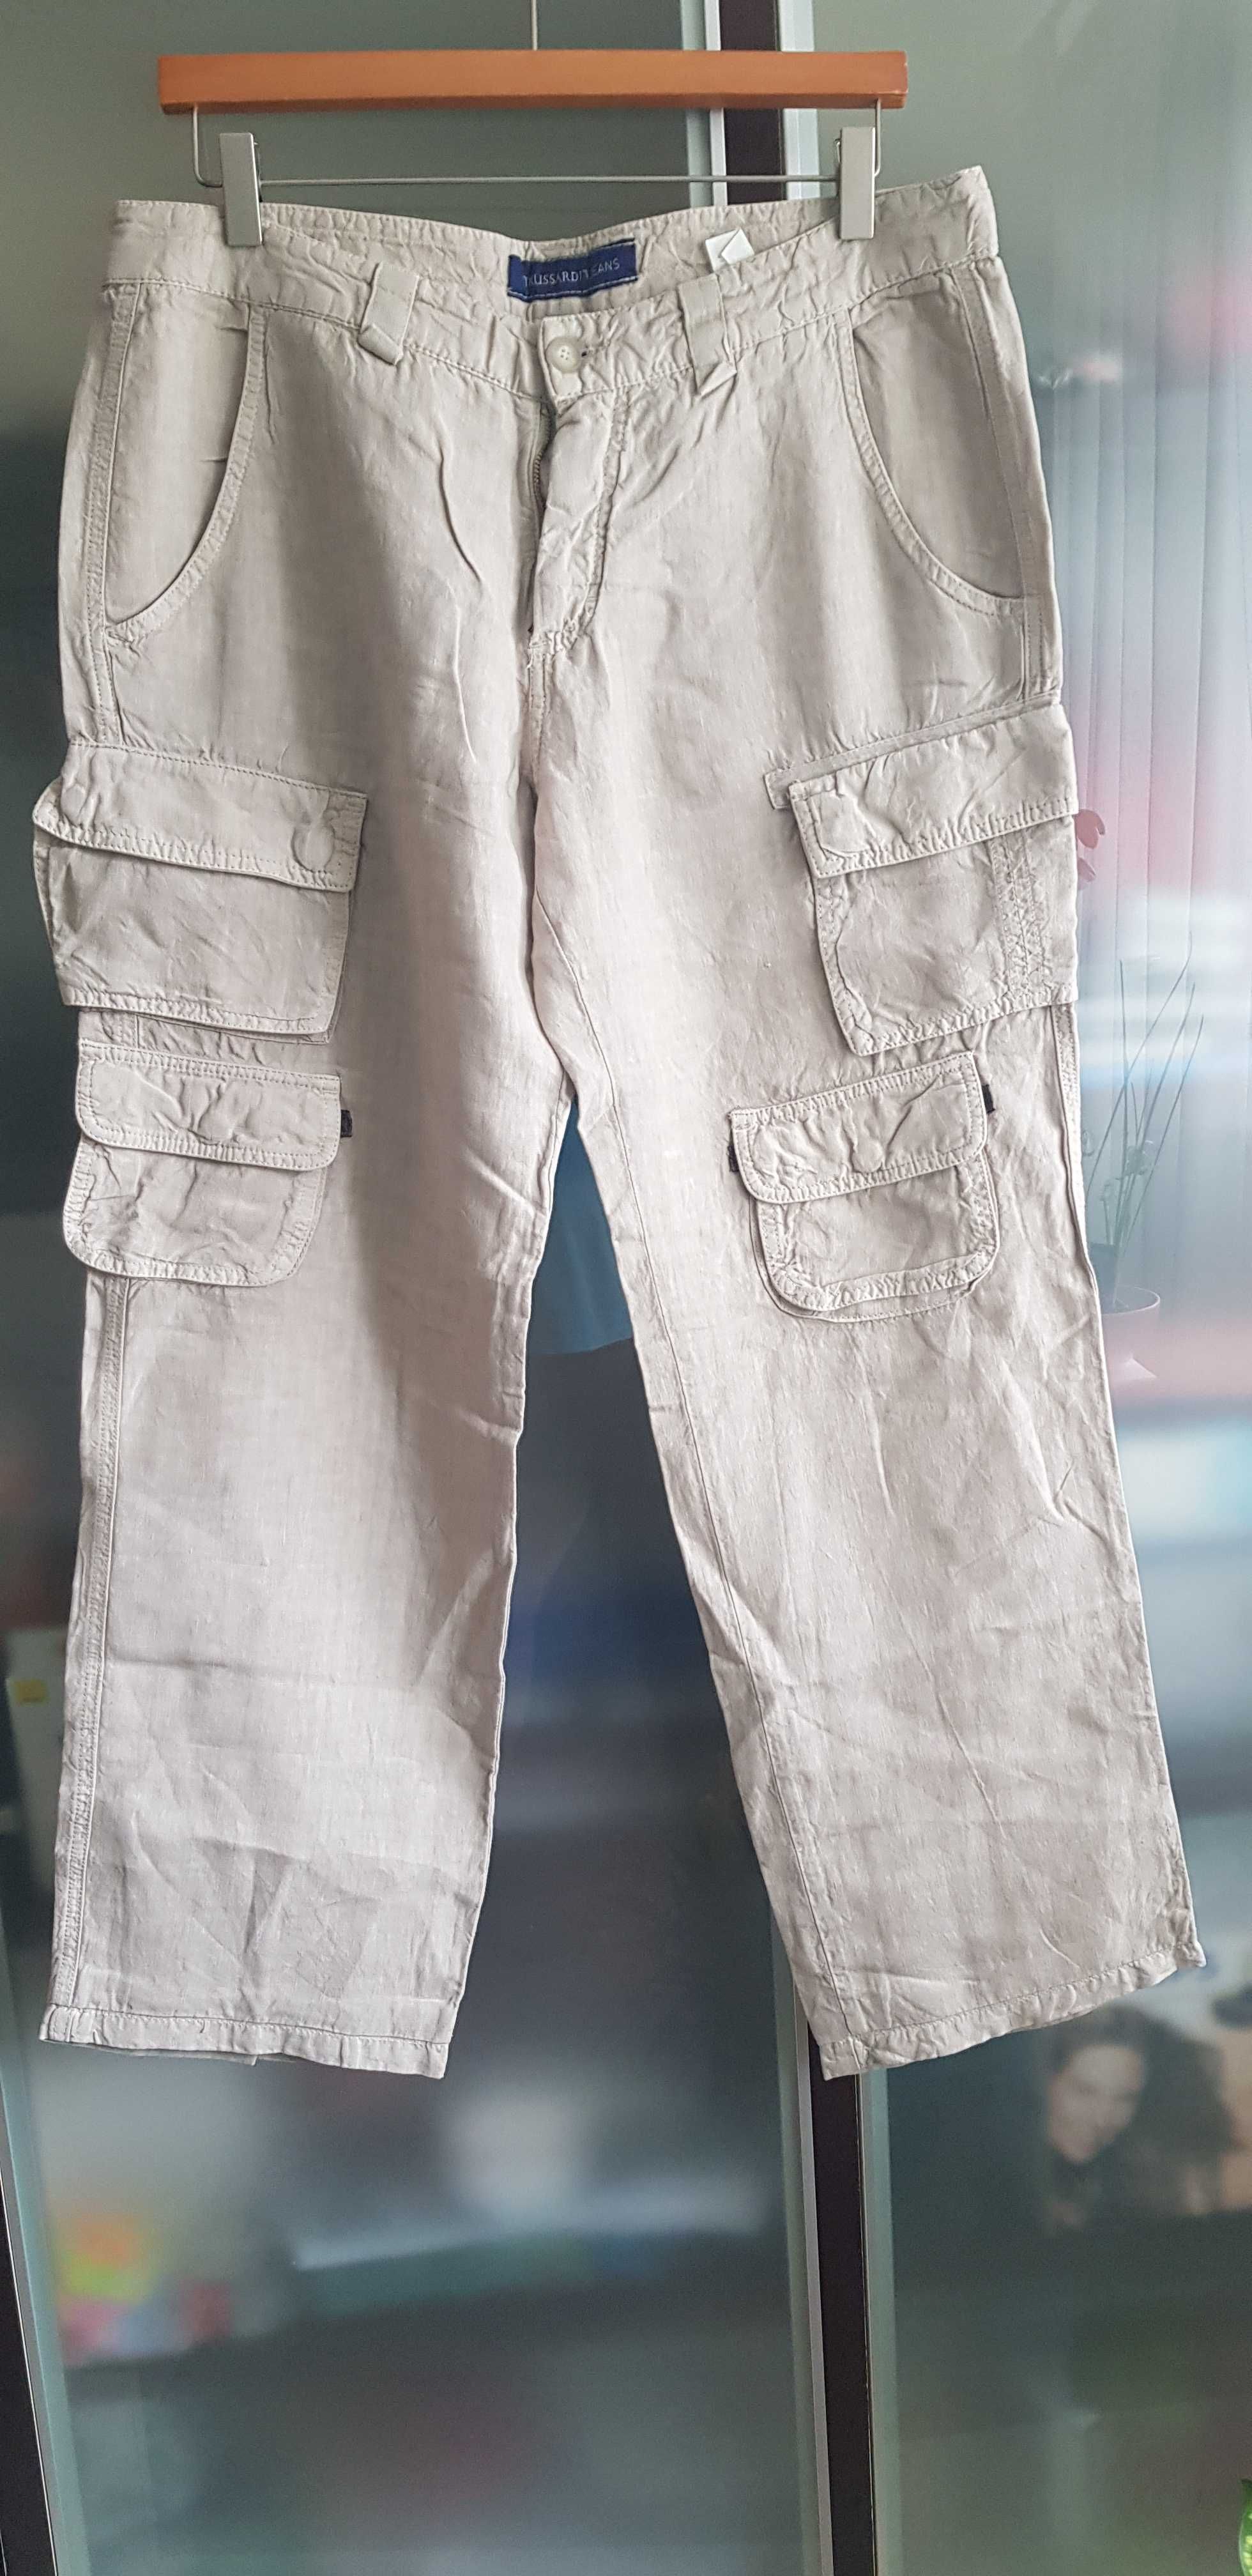 Pantaloni Trussardi Jeans In100%